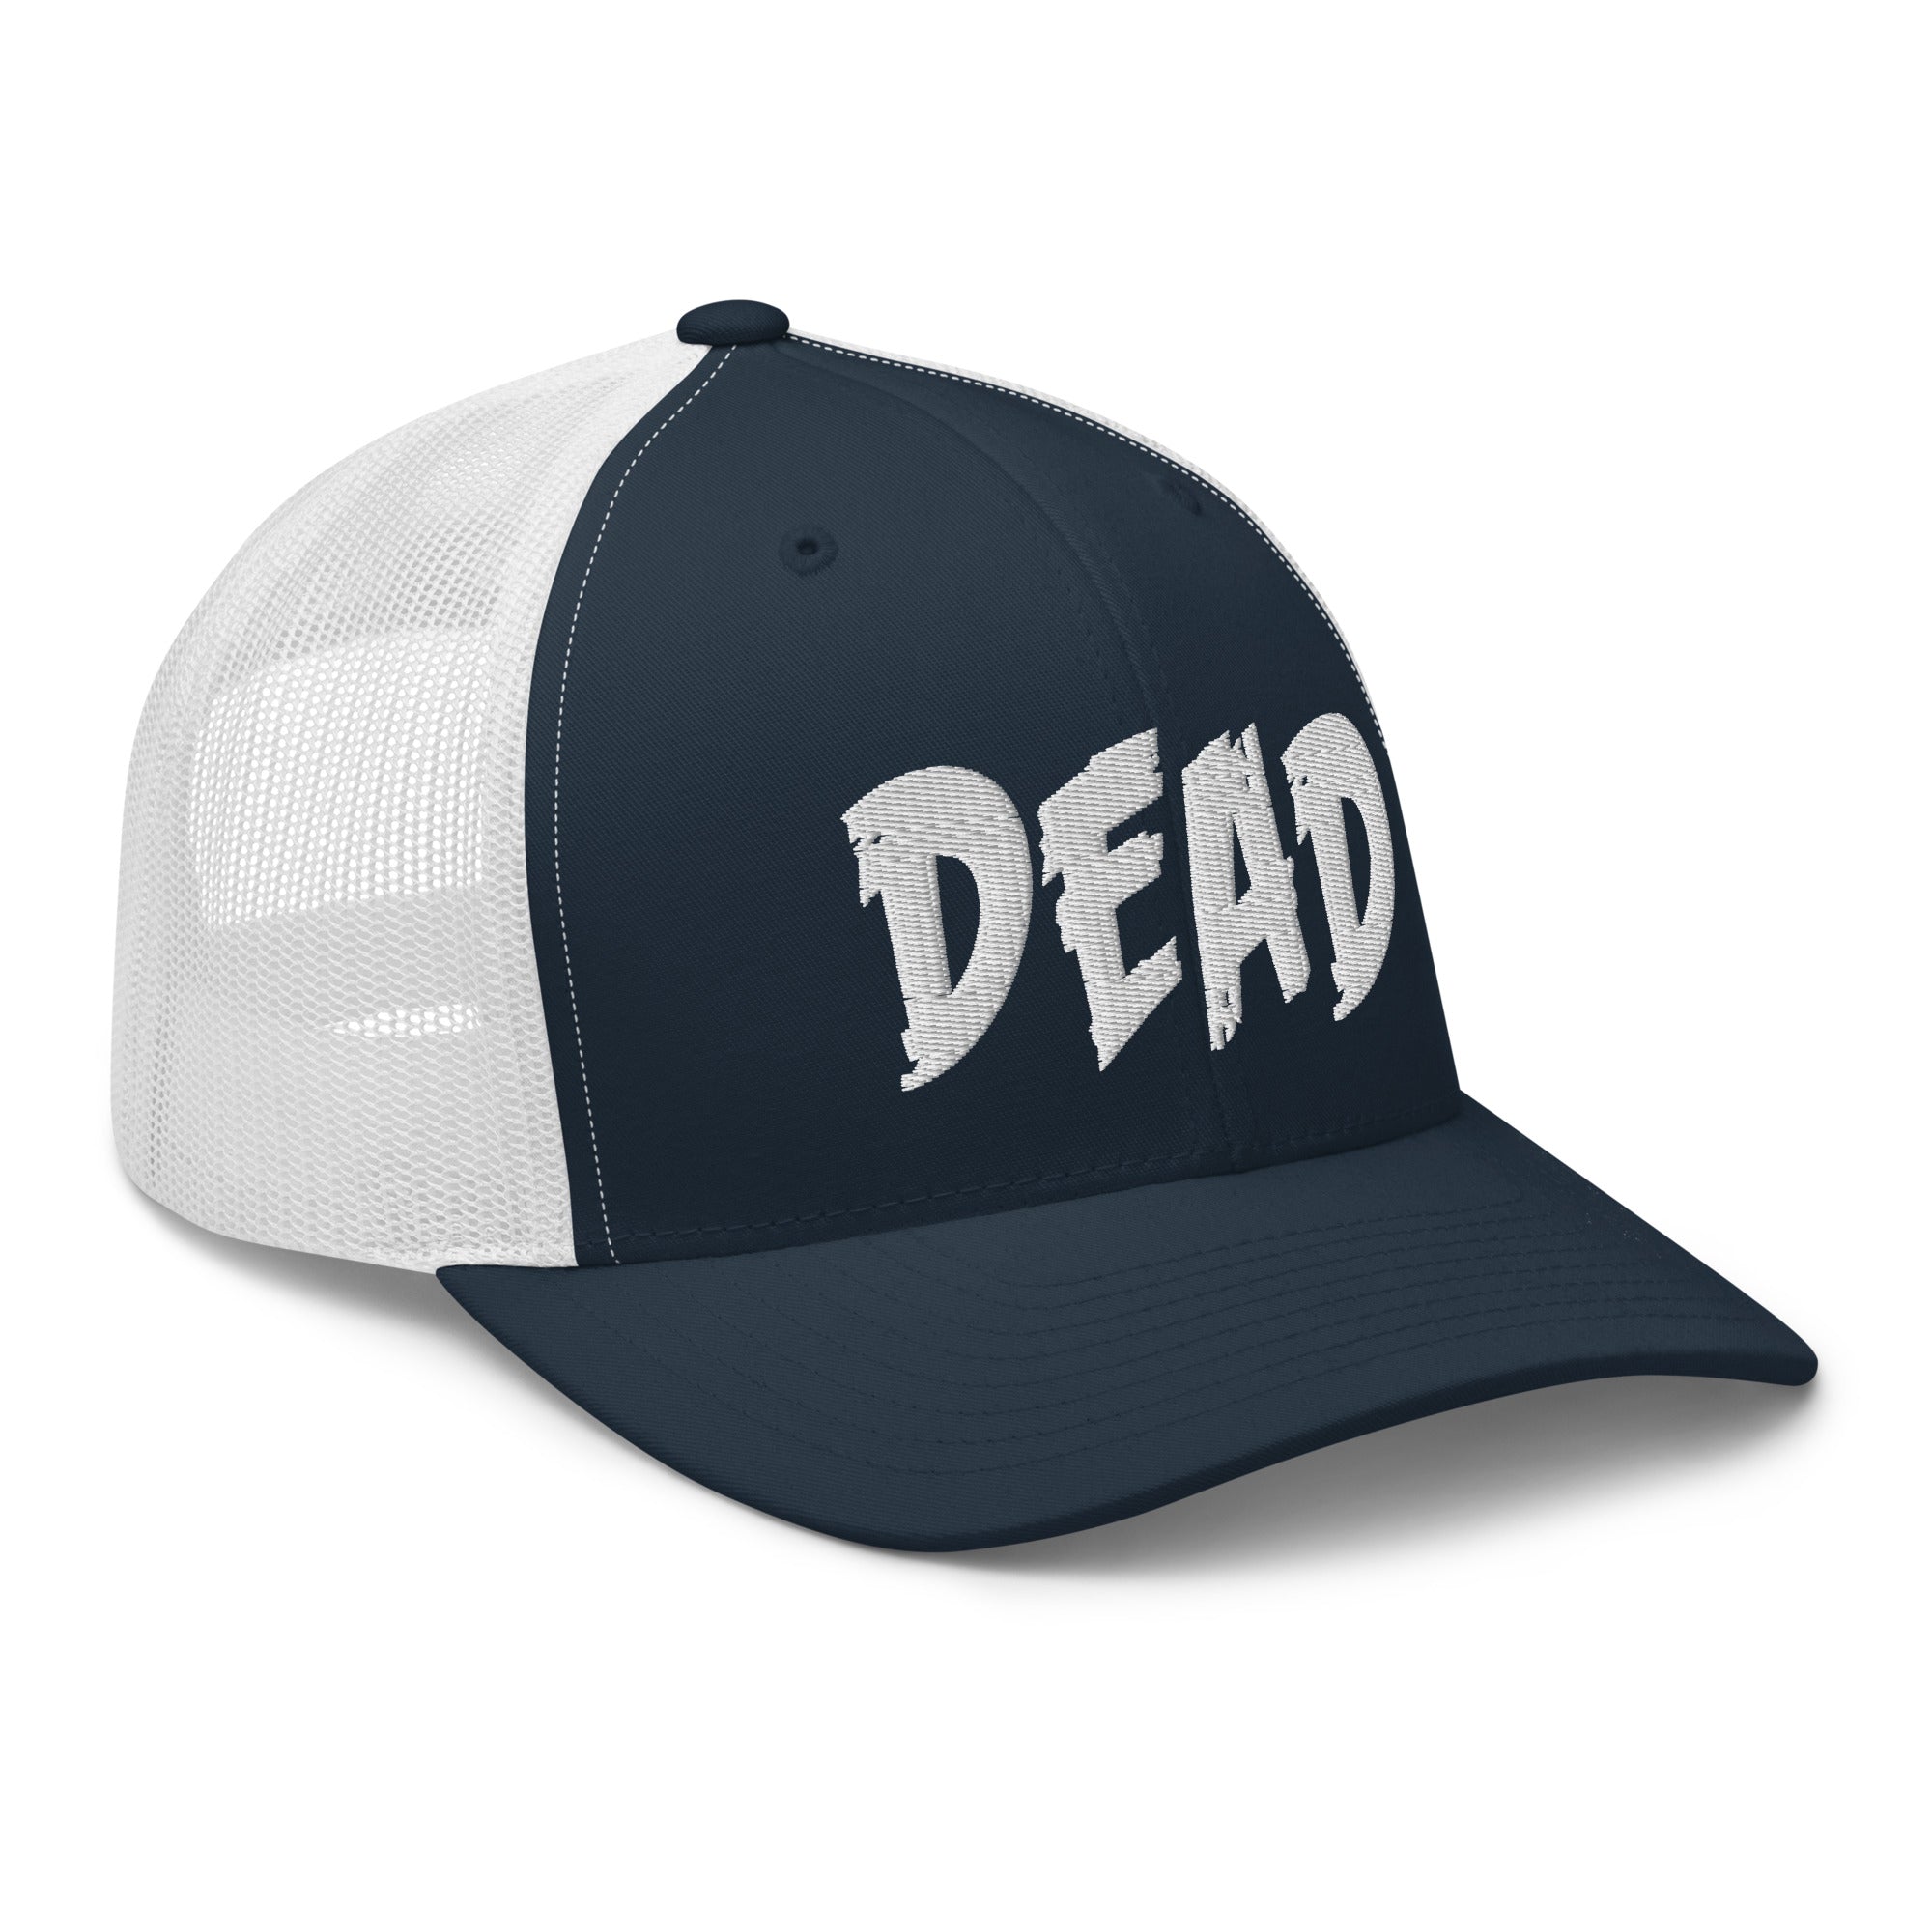 White DEAD Emotional Depression Embroidered Trucker Cap Snapback Hat